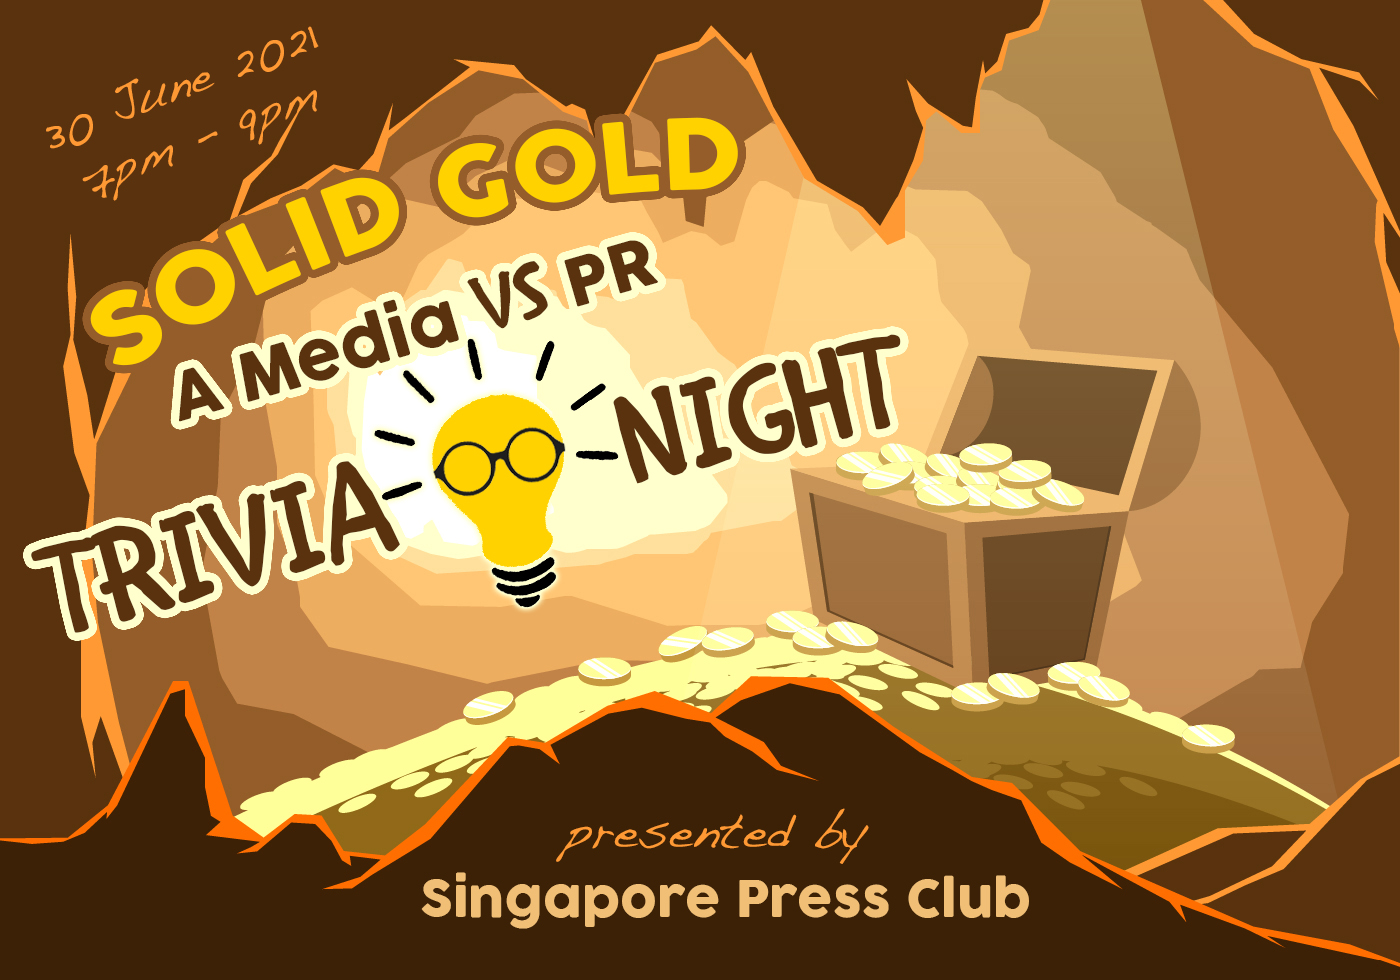 Singapore Press Club's Golden Anniversary Trivia Quiz Night